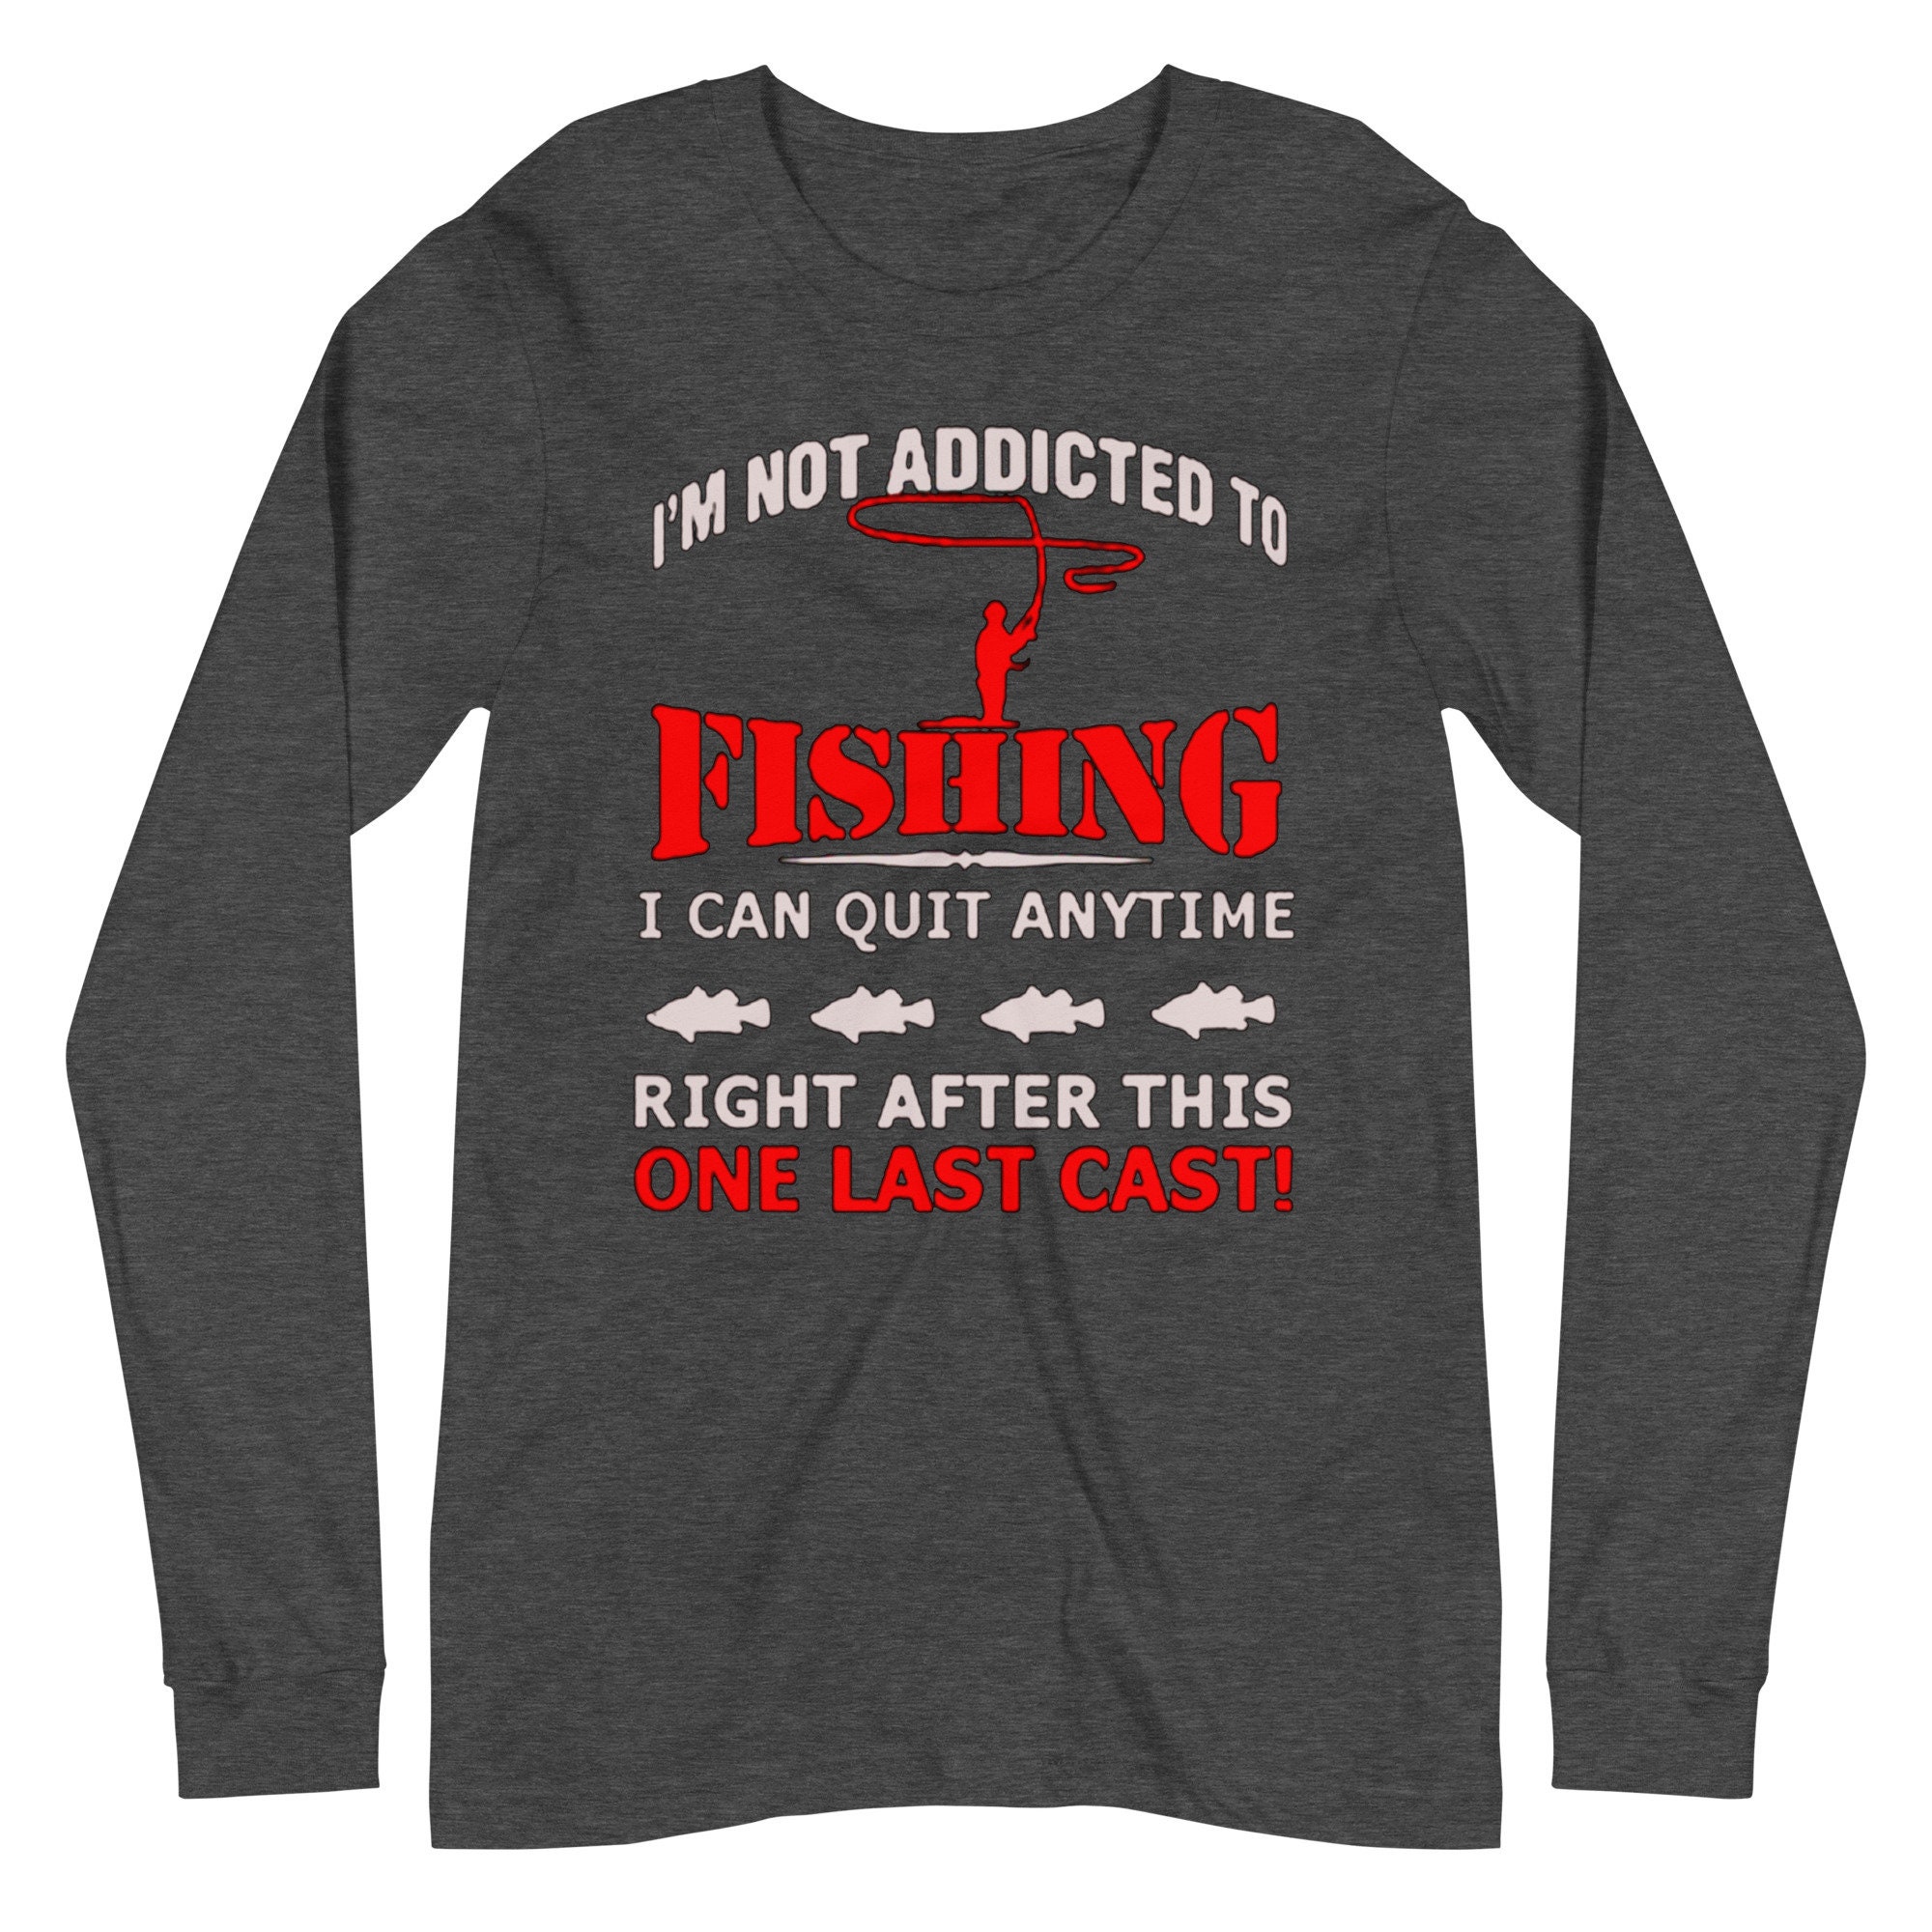 Funny Fishing Addiction Men's Women's Unisex Long Sleeve Tee T-shirt -   Canada